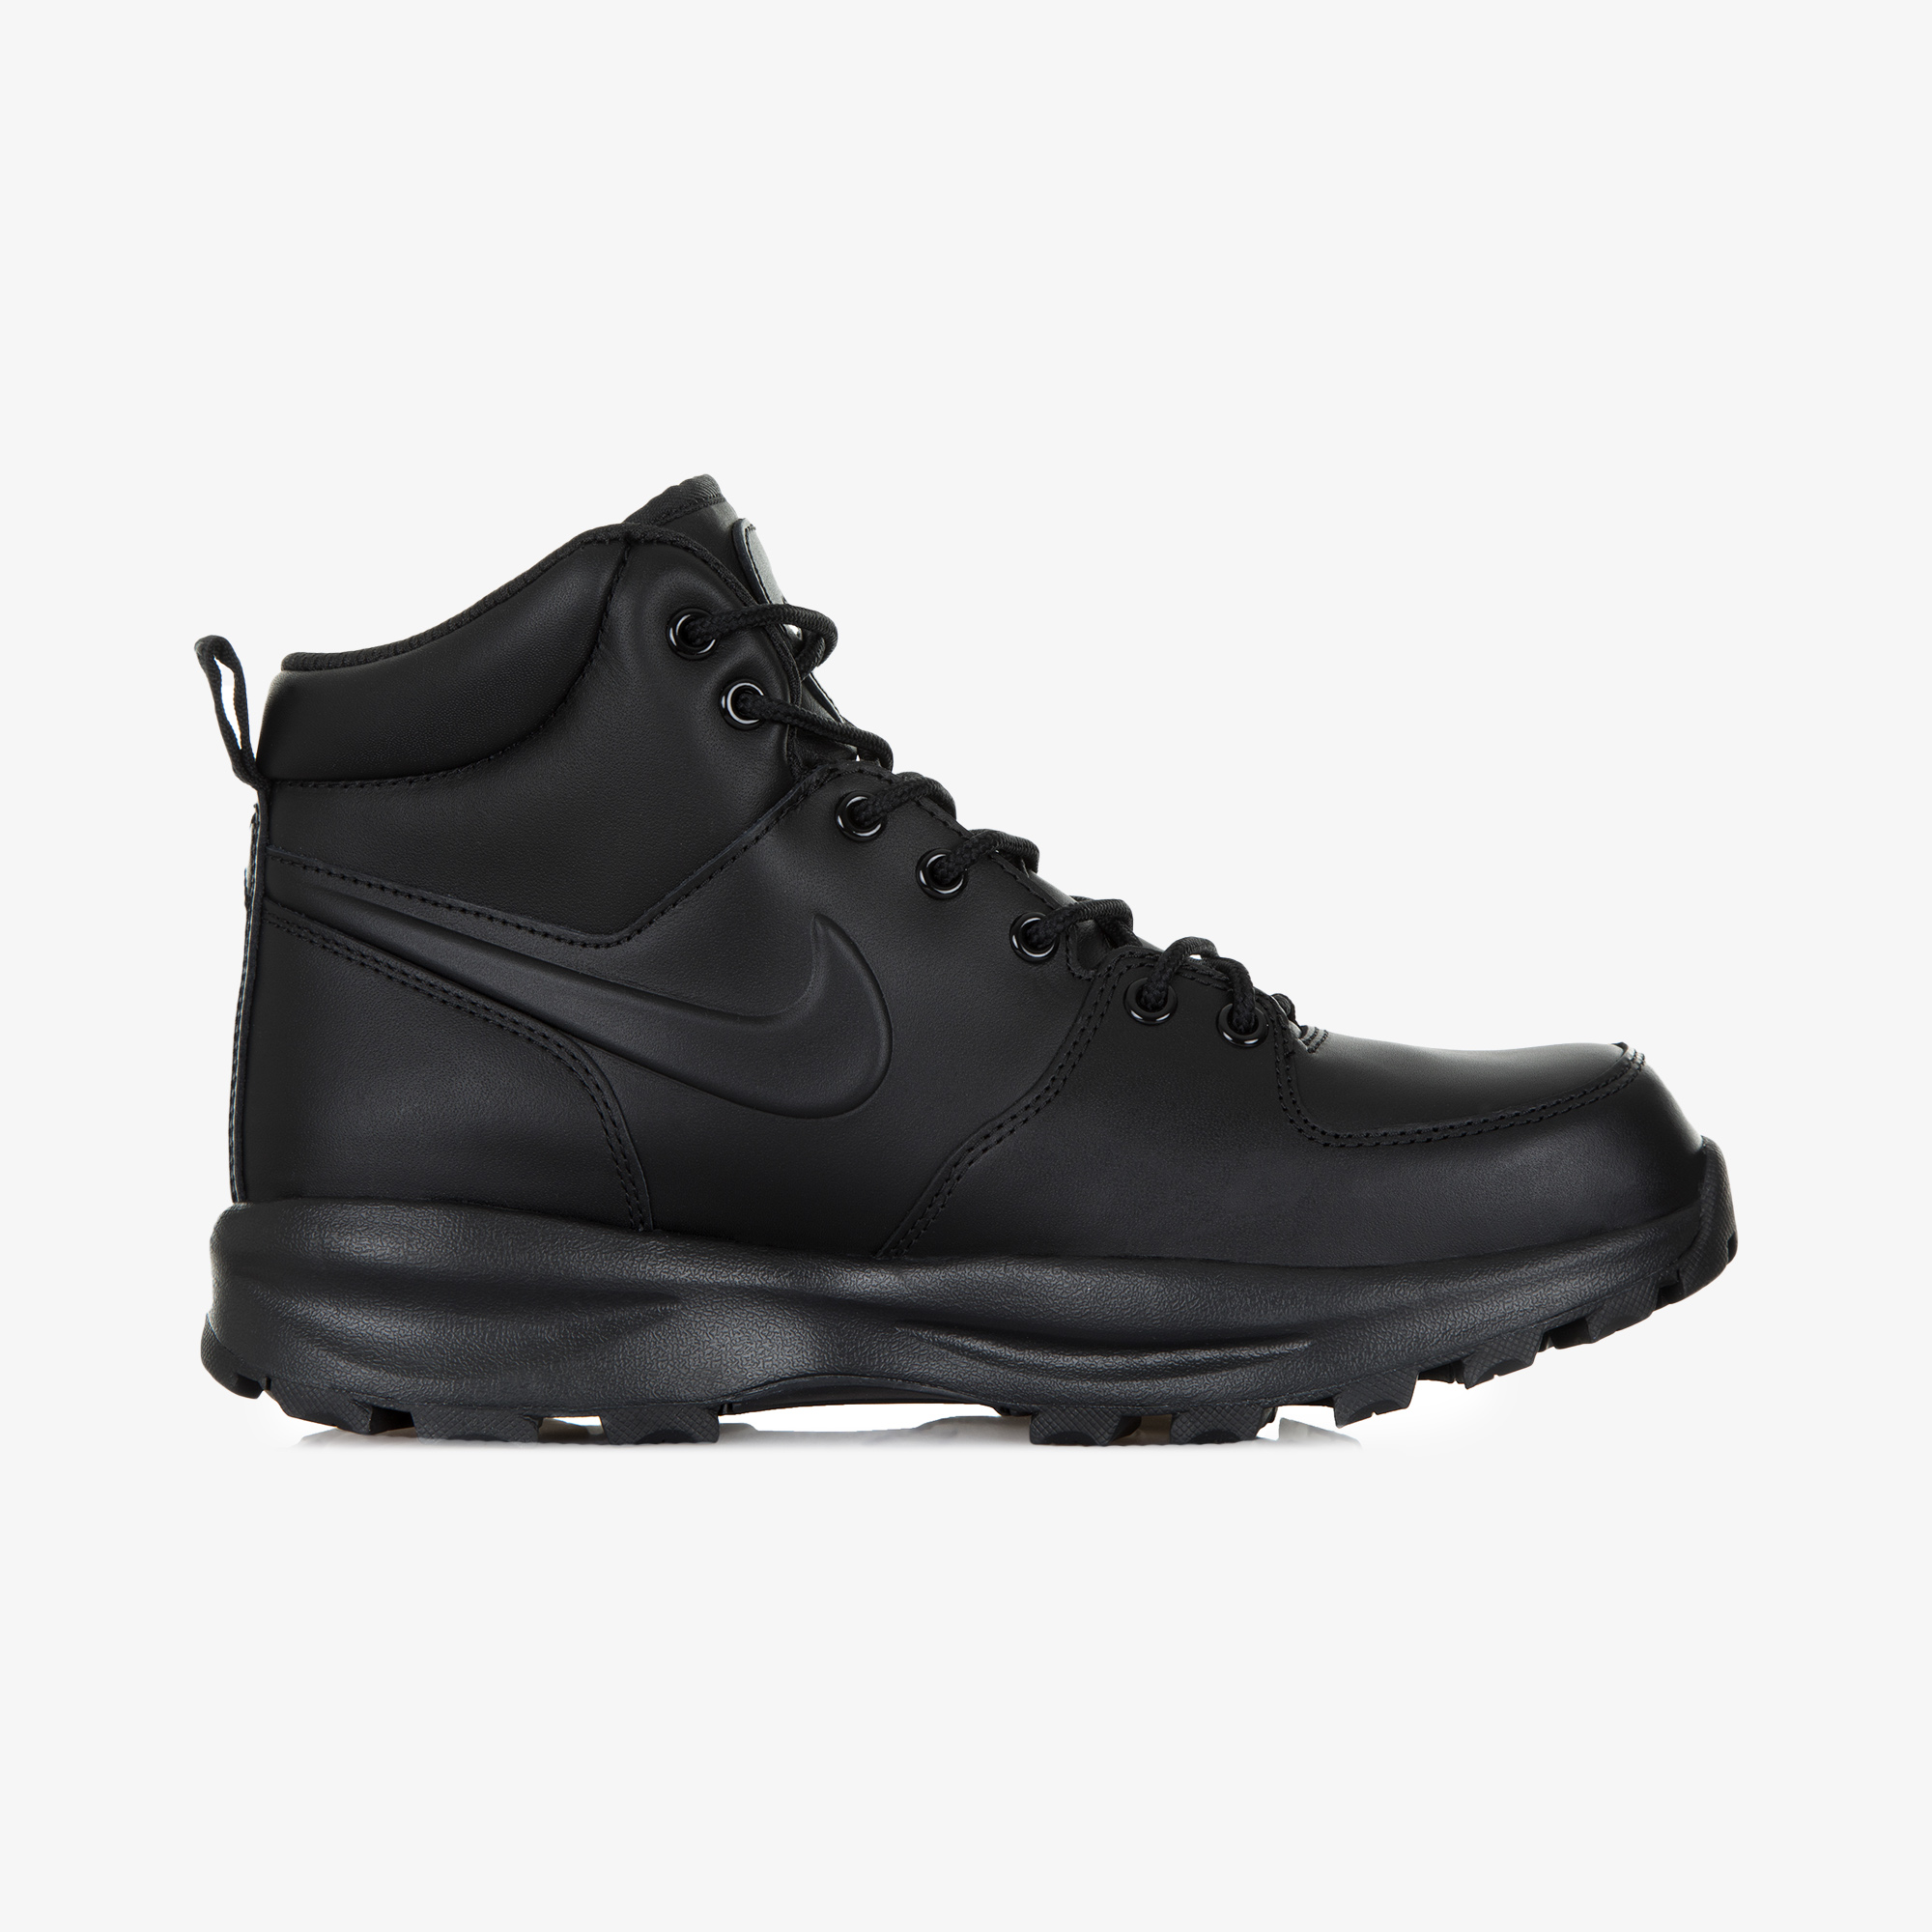 Ботинки Nike Nike Manoa Leather 454350-N06-003, размер Да, цвет черный 454350-003 - фото 5